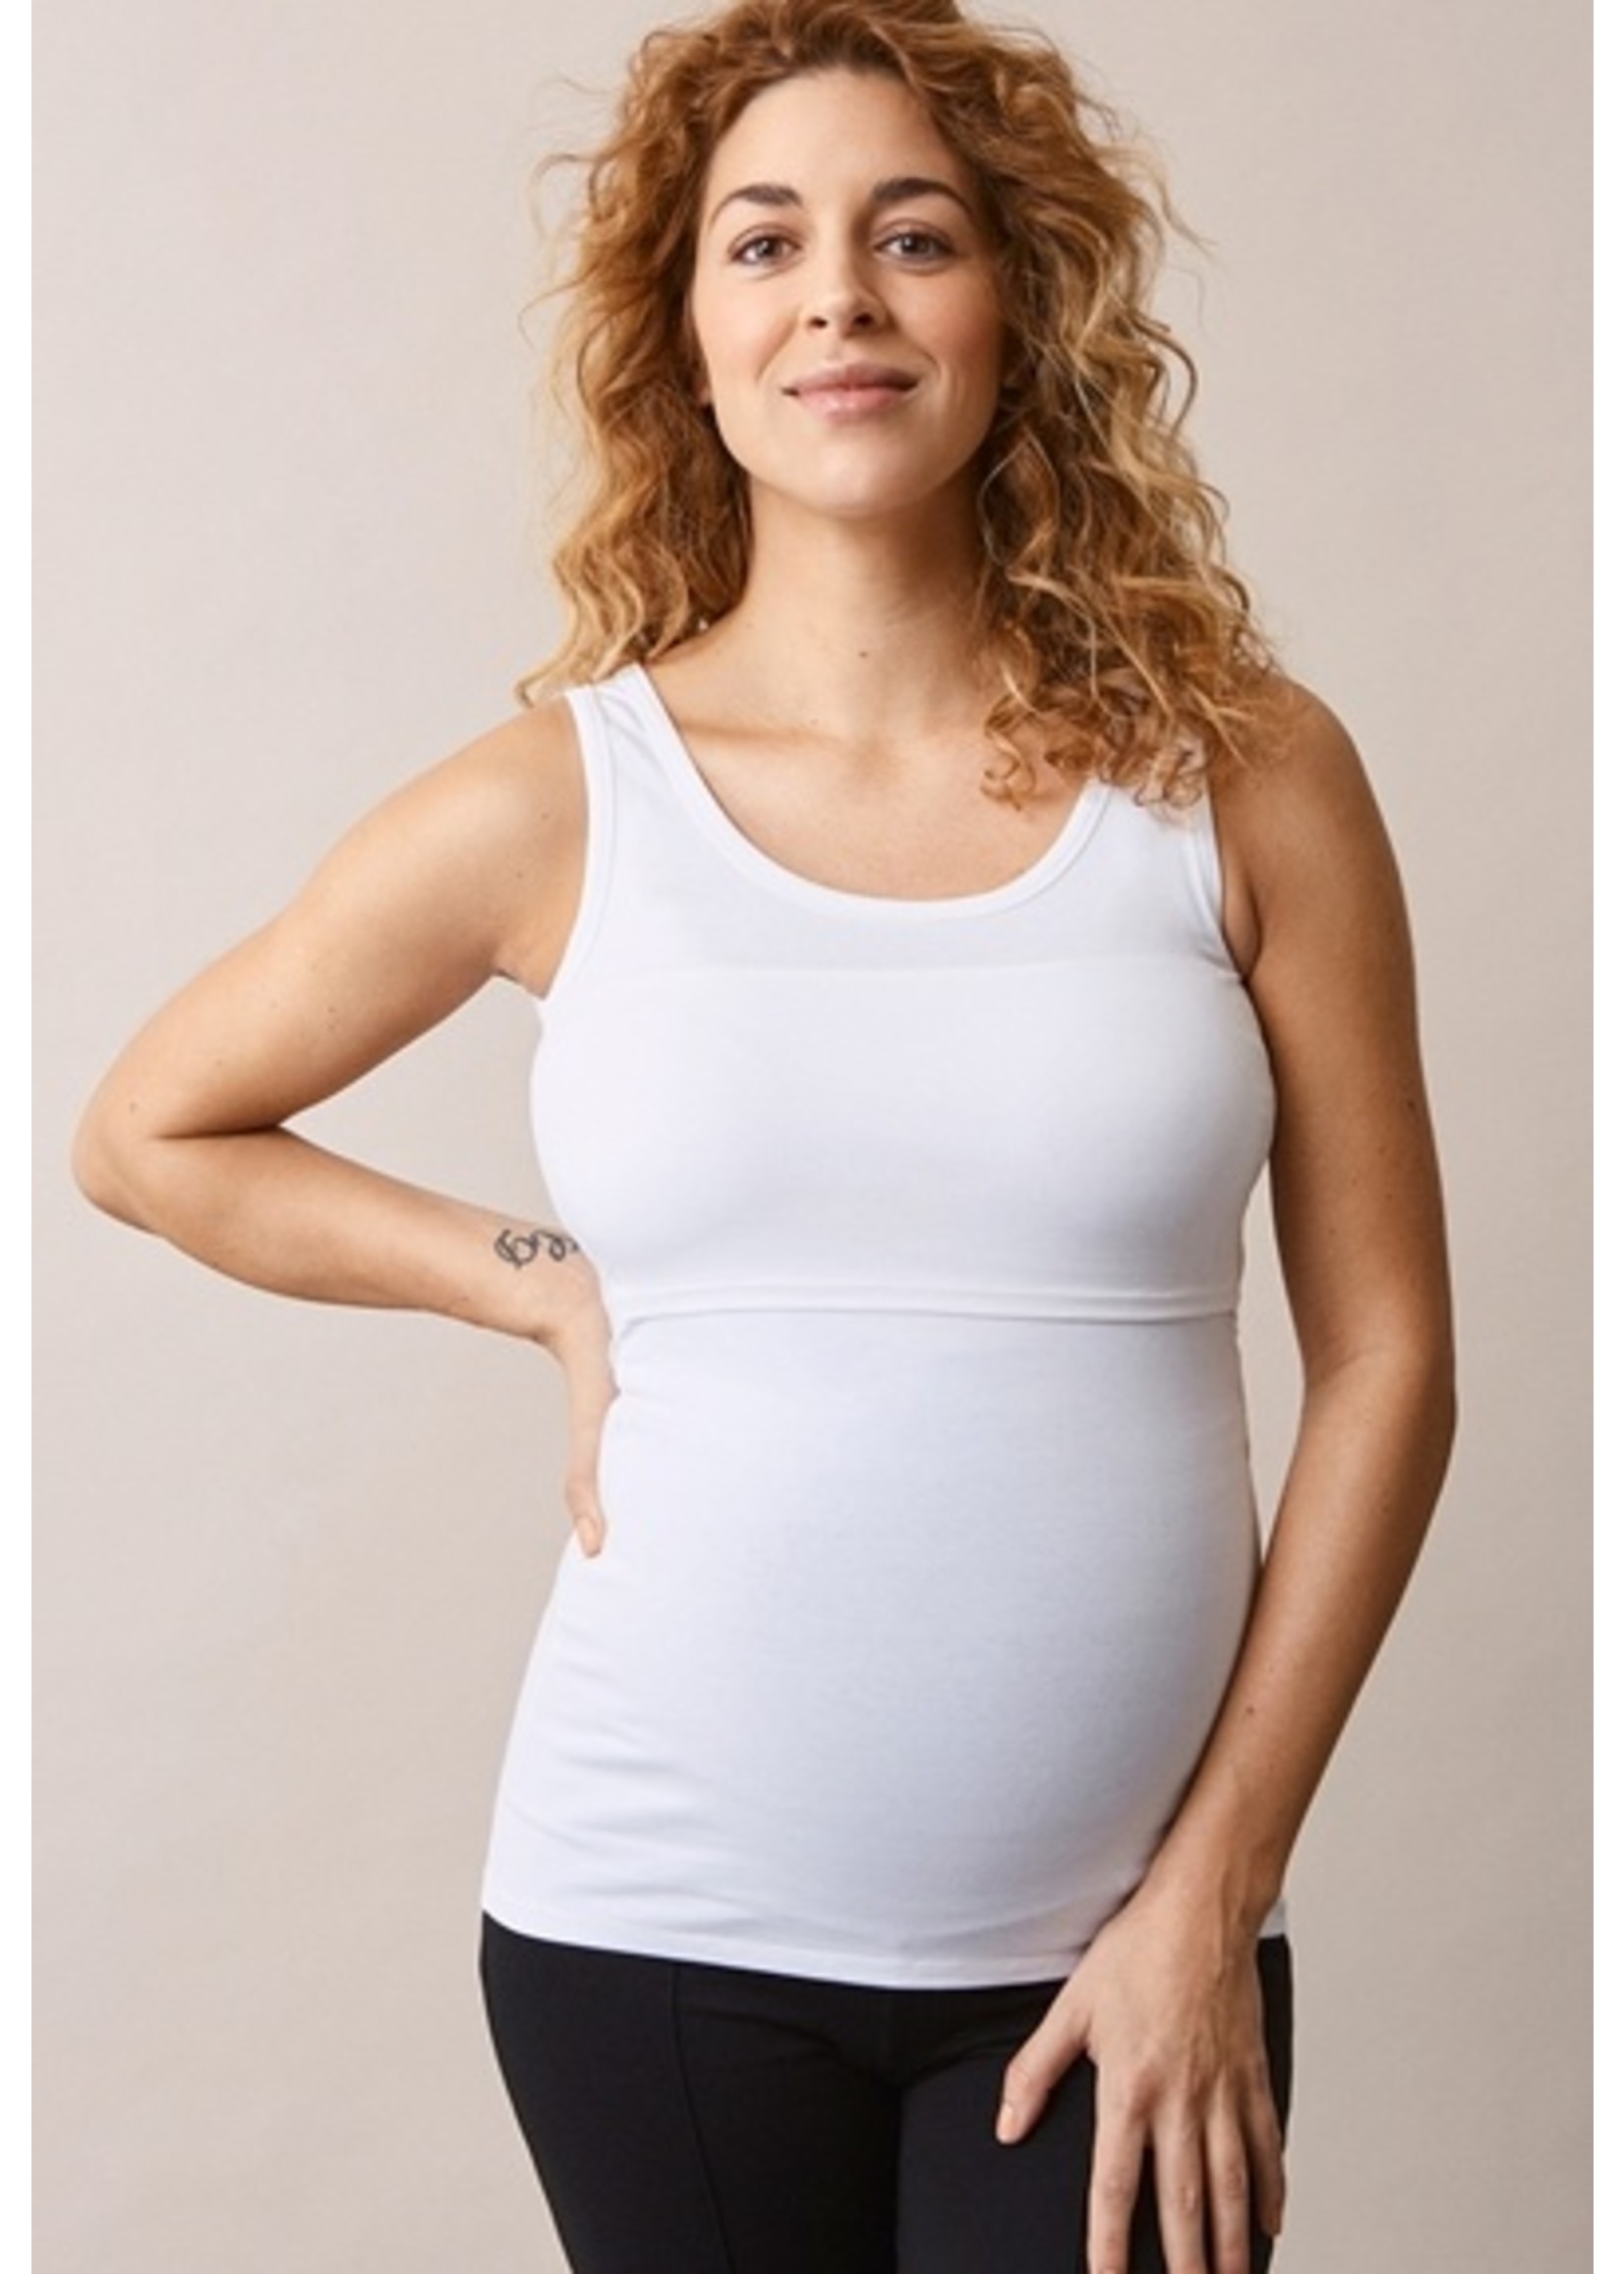 Nursing Cami Tank Tops for Breastfeeding Women Nursing Tops Maternity  Shirts Built in Shelf Bra Camisoles